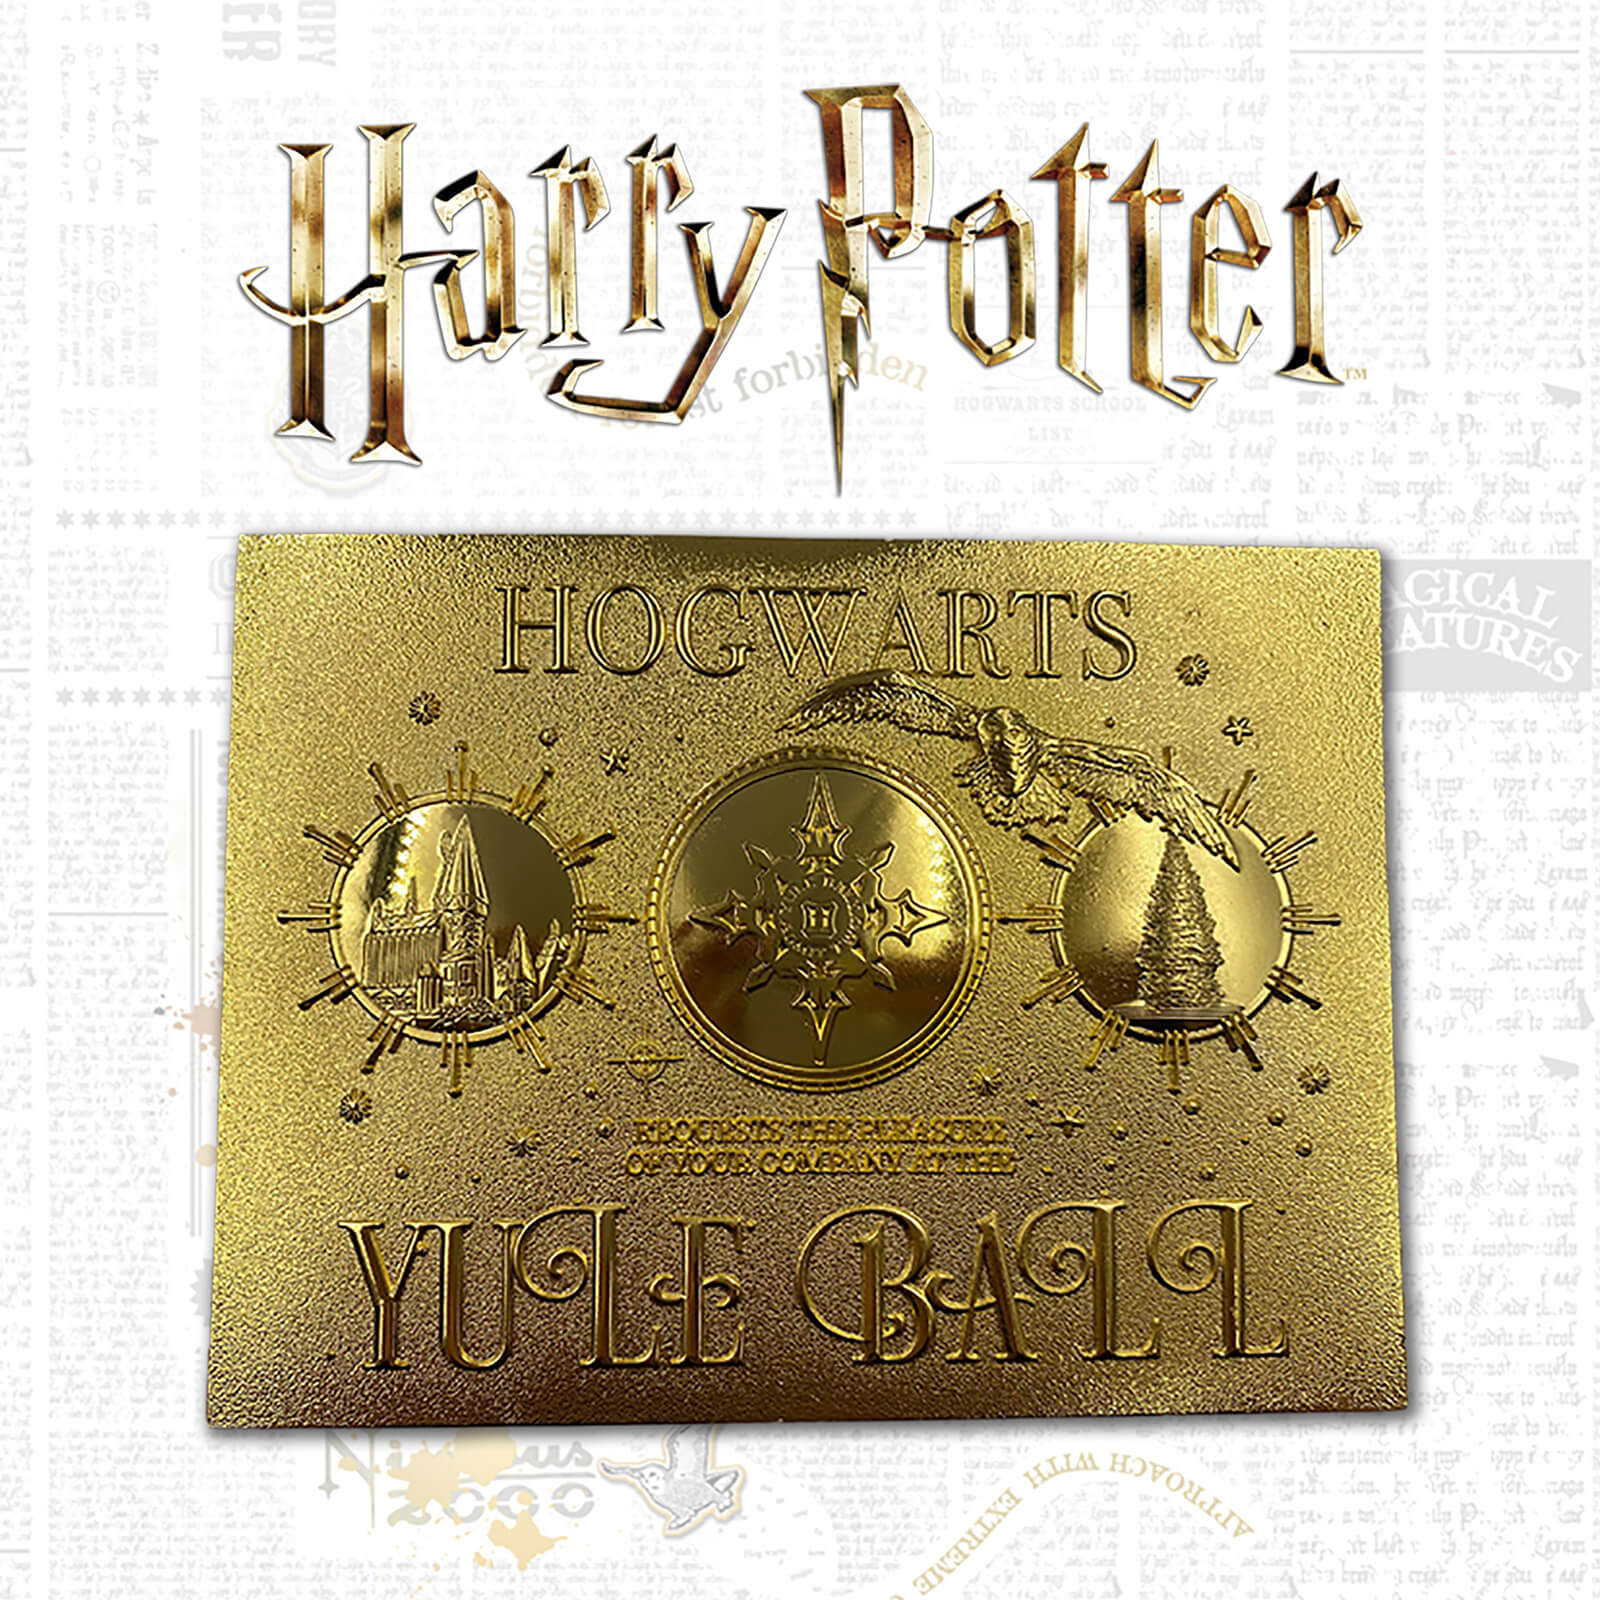 Ticket d'Invitation Harry Potter Bal de Noel Plaque Or 24K Édition Limitee Zavvi Exclusif